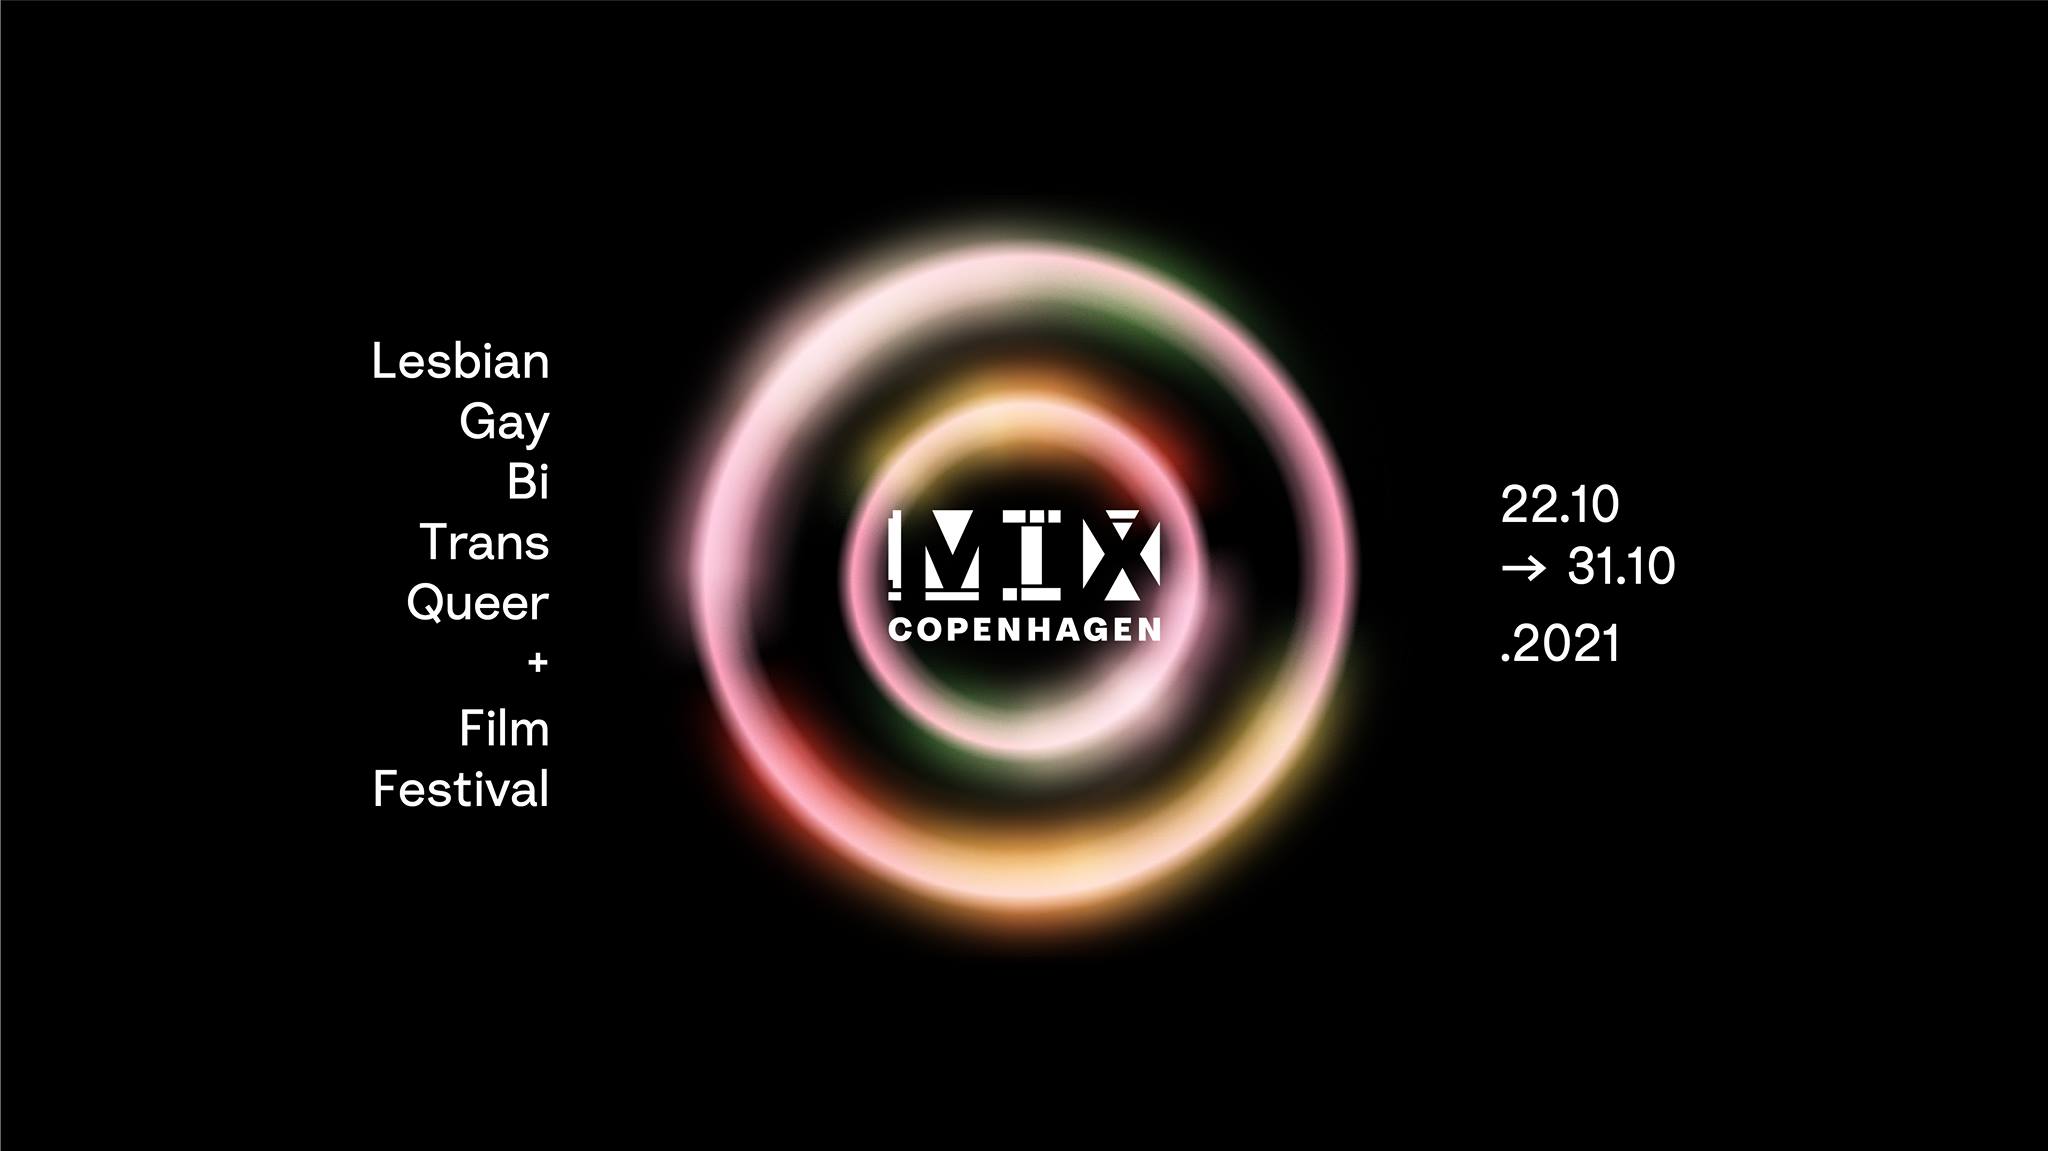 MIX Copenhagen LGBTQ+ Film Festival